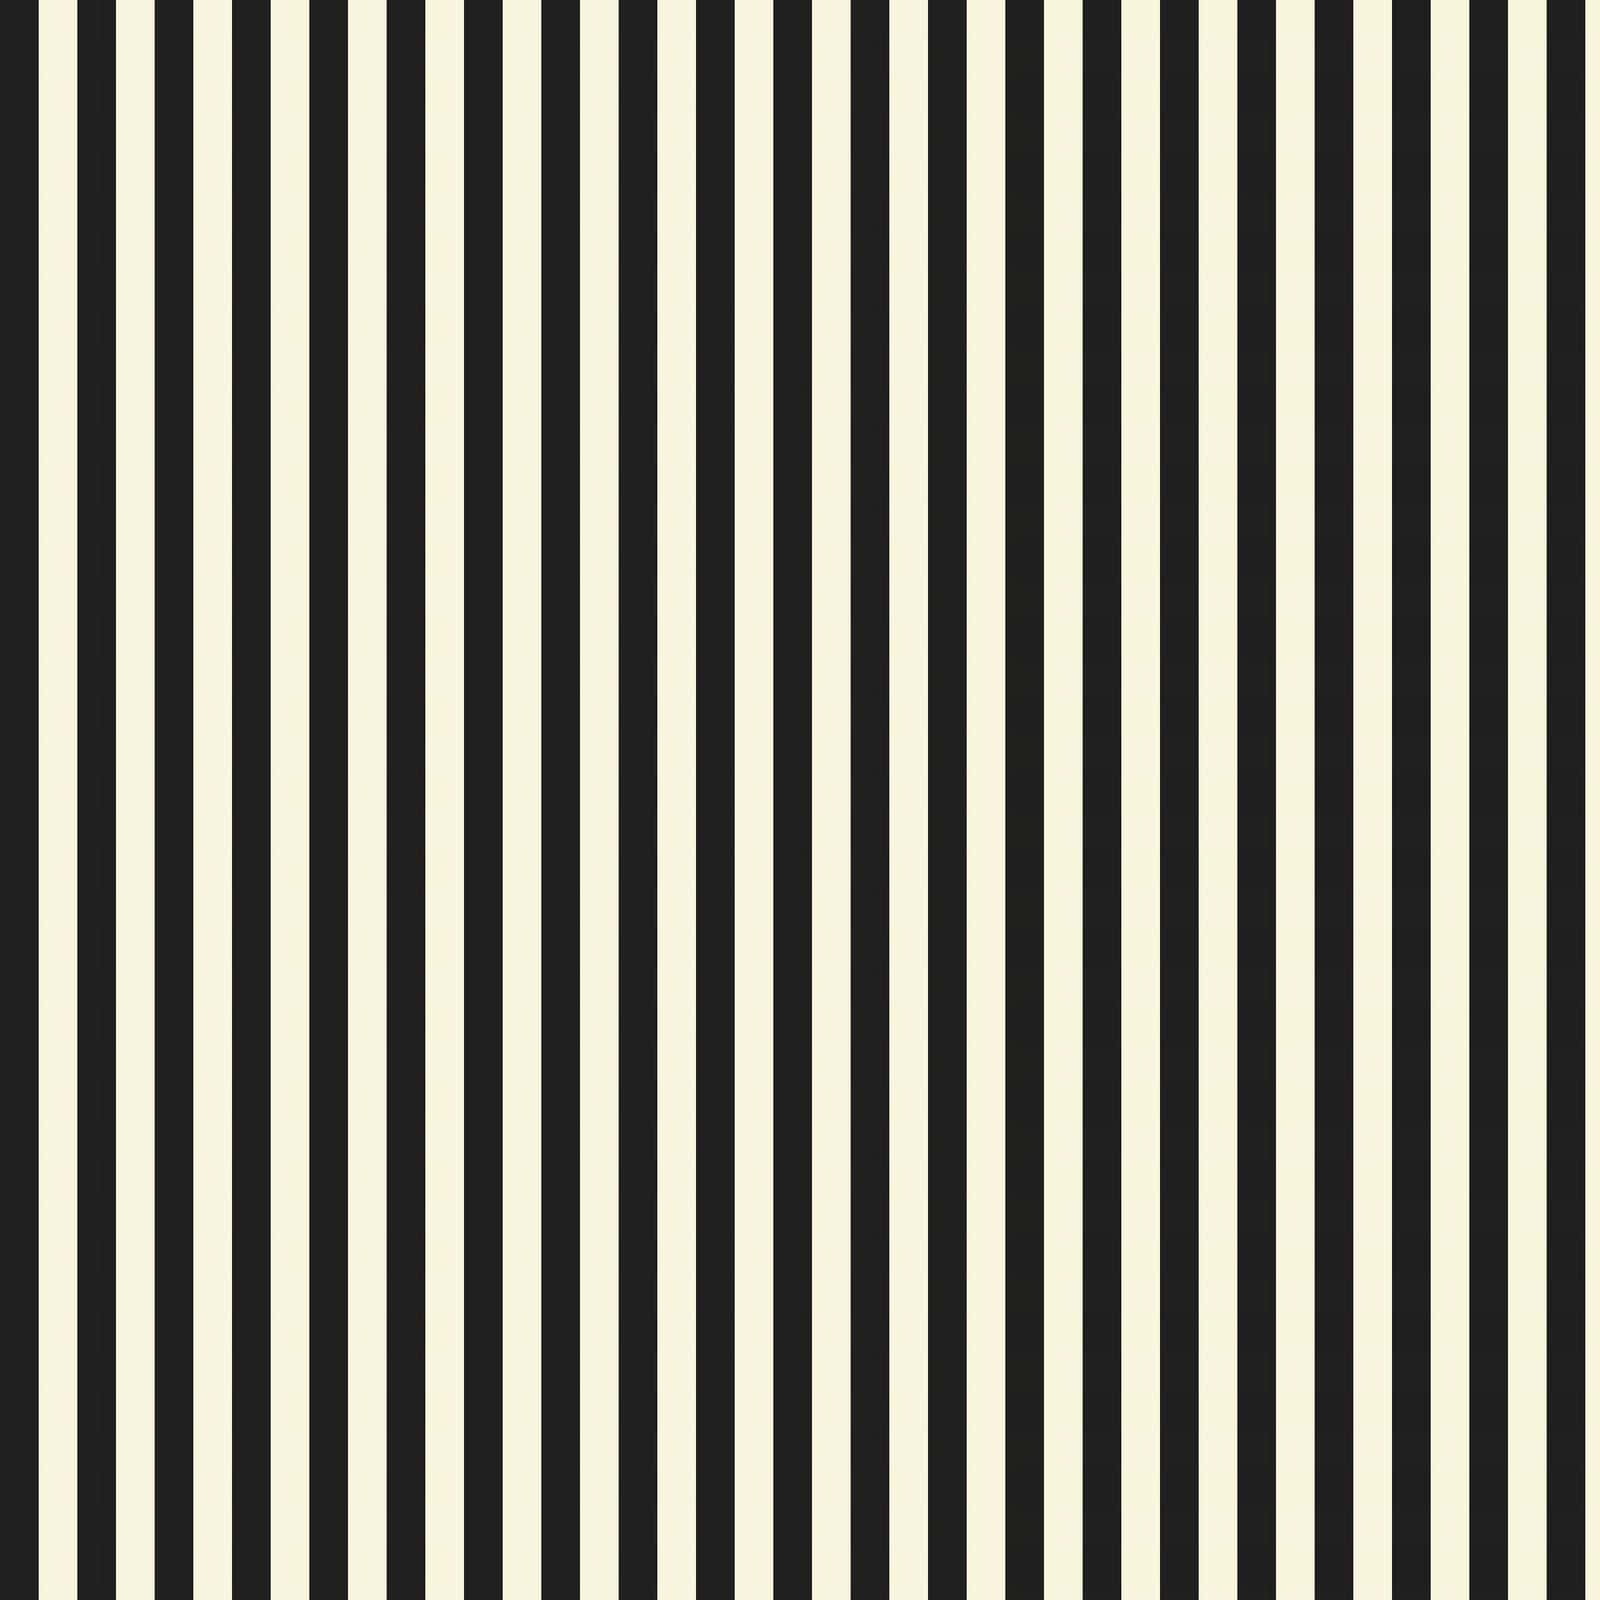 A Black And White Striped Wallpaper